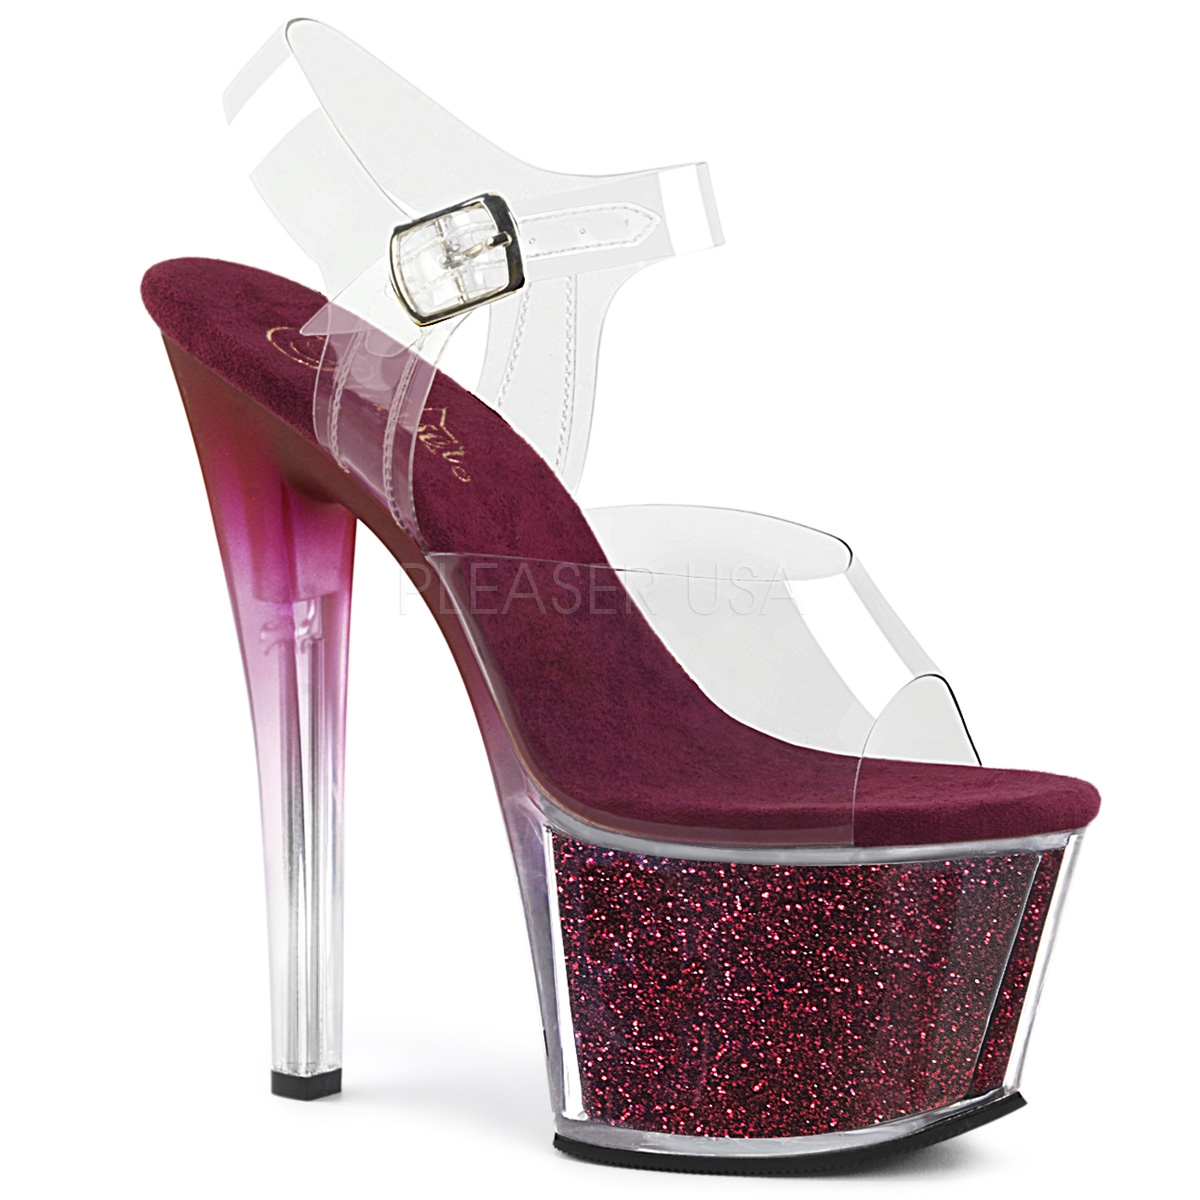 709-Glitter, 7 Inch Stiletto High Heel with 2.75 Inch Platform Ankle Strap  Sandal w/Glitter